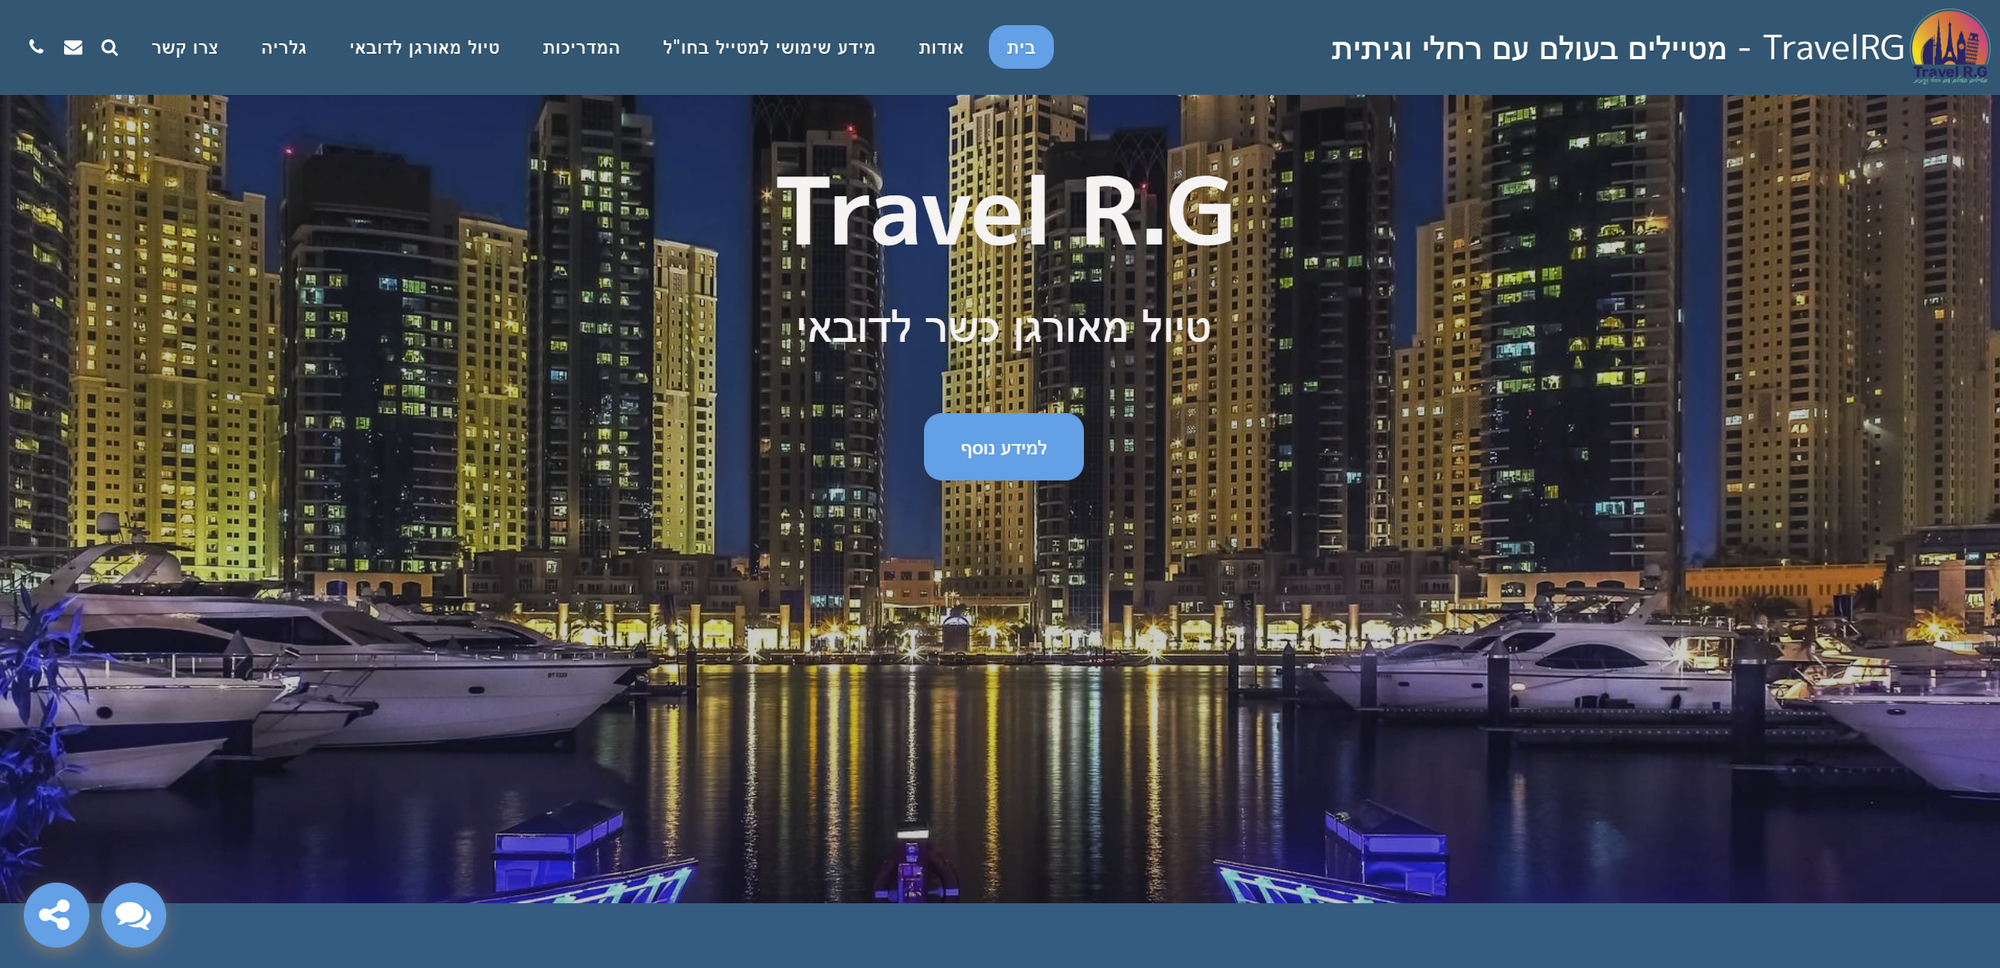 TravelRG - מטיילים בעולם עם רחלי וגיתית